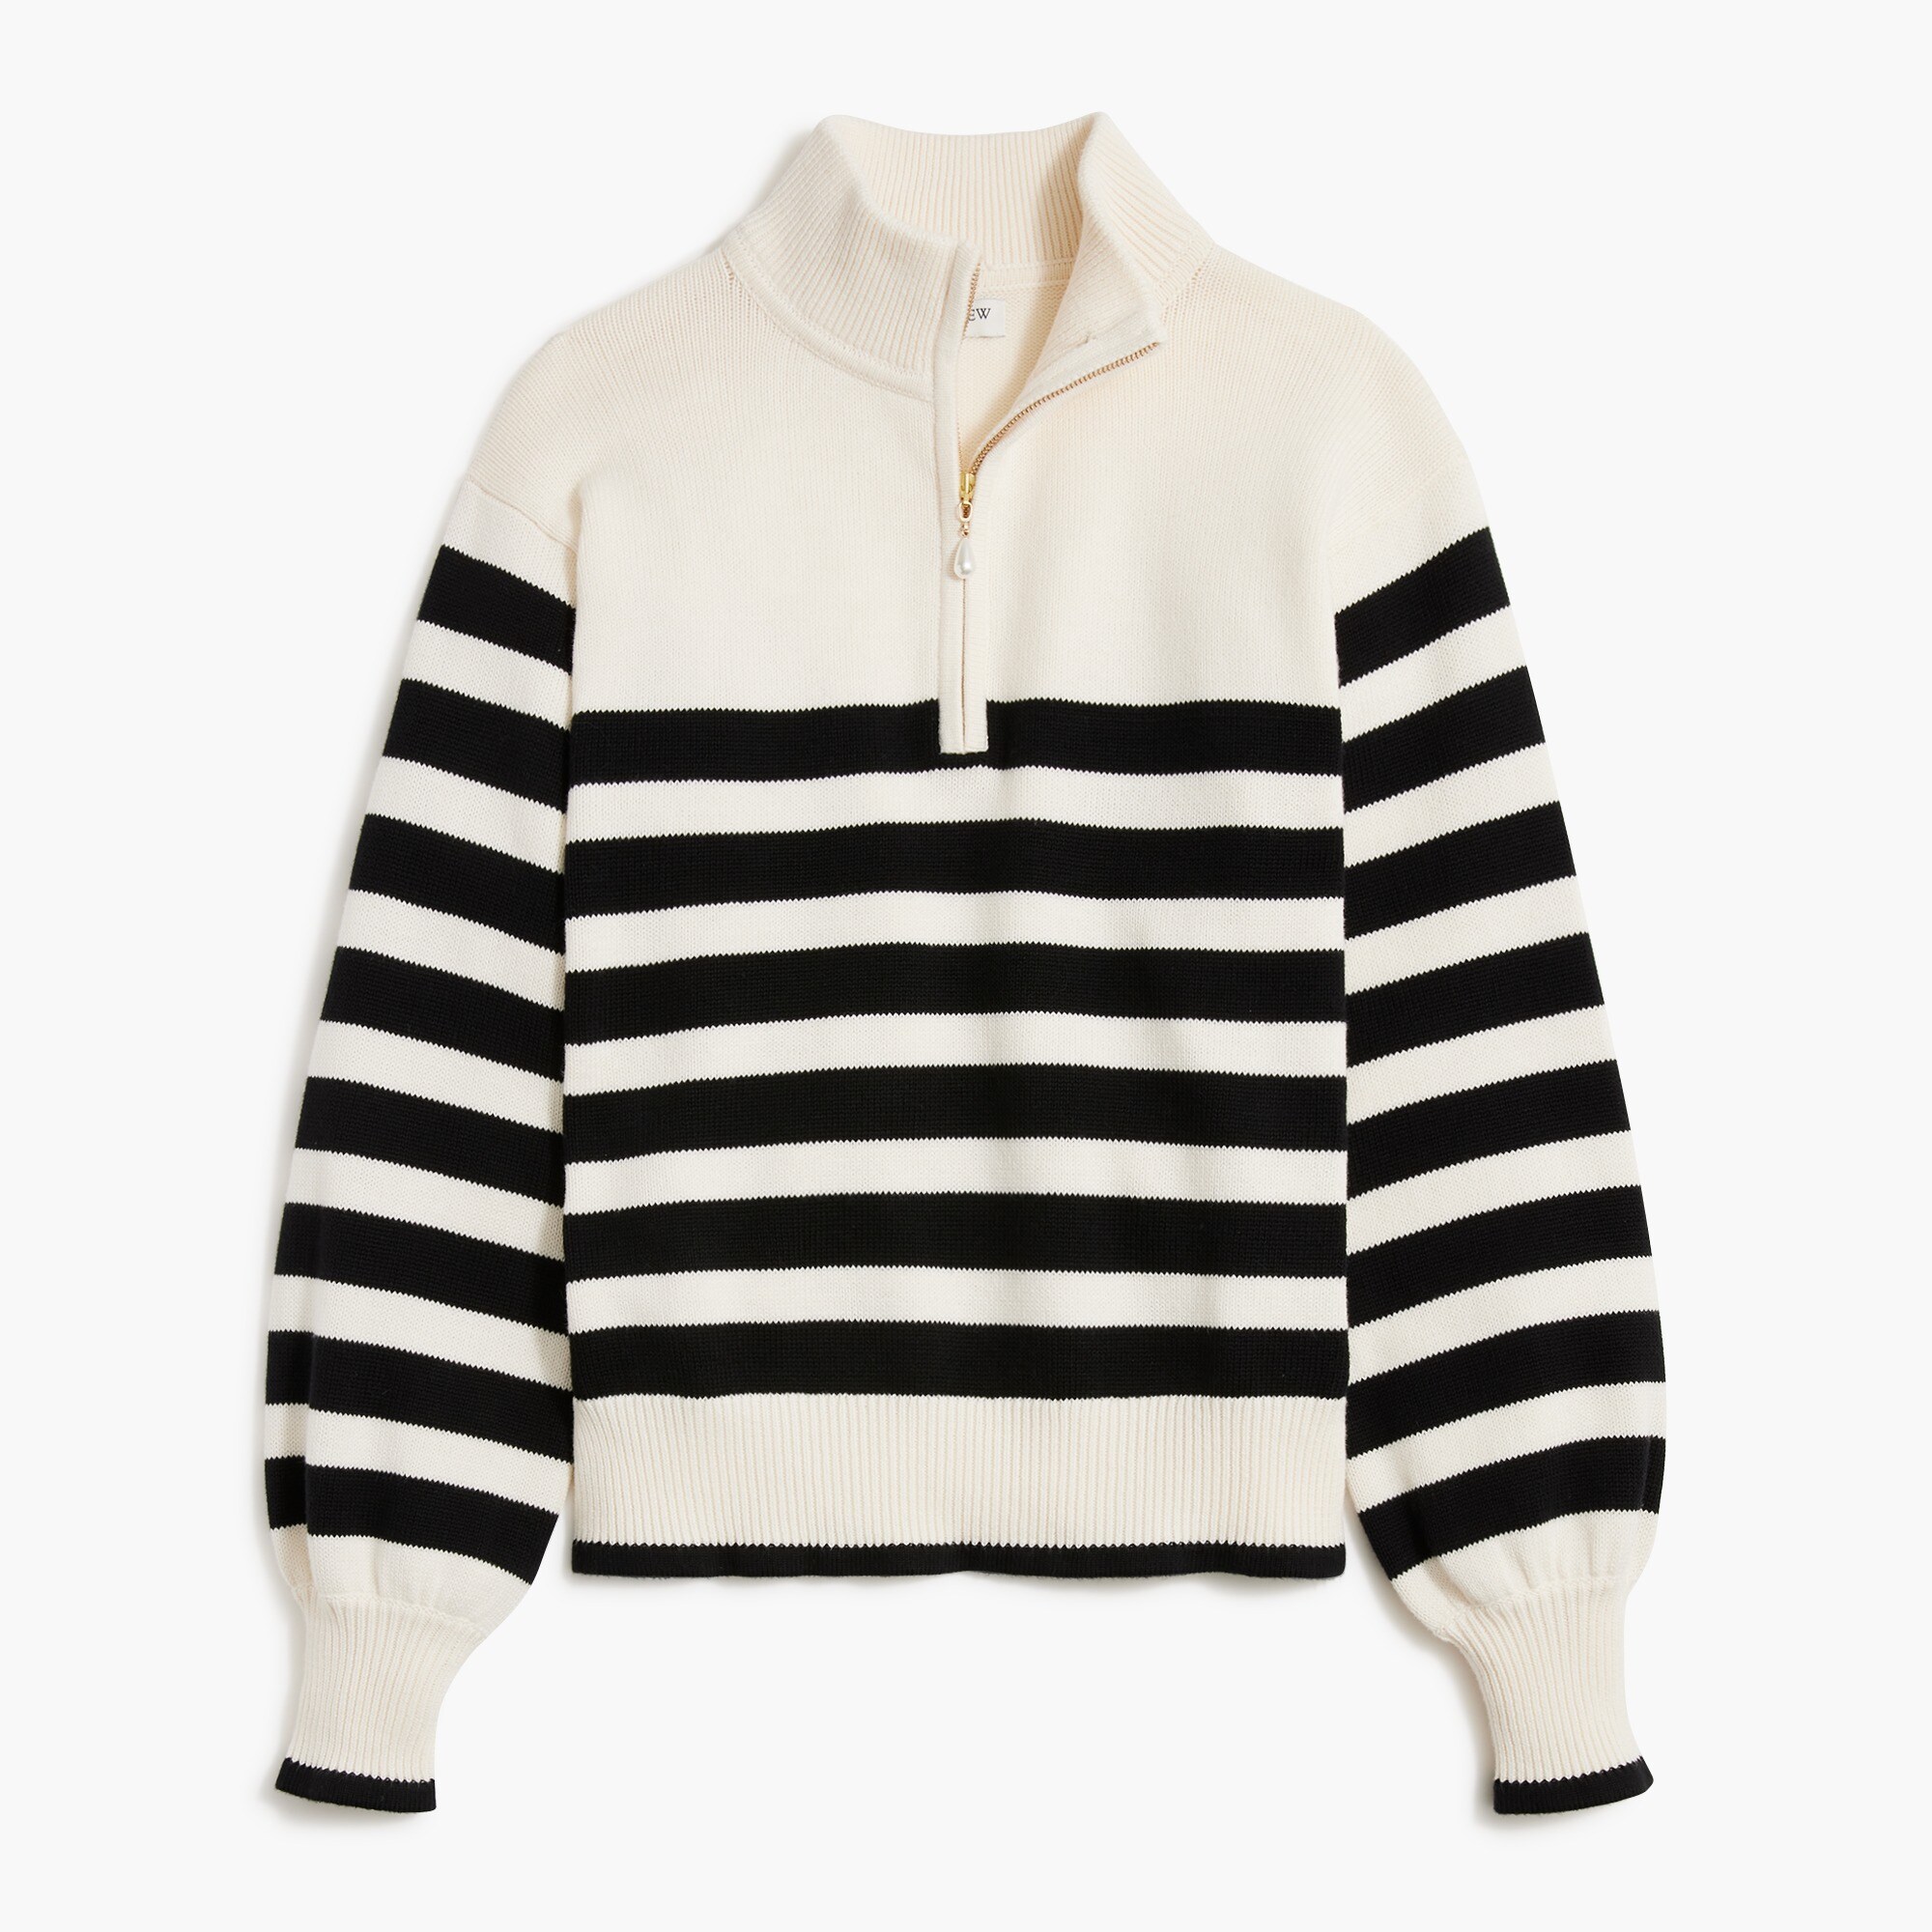  Striped half-zip sweater with pearl zipper